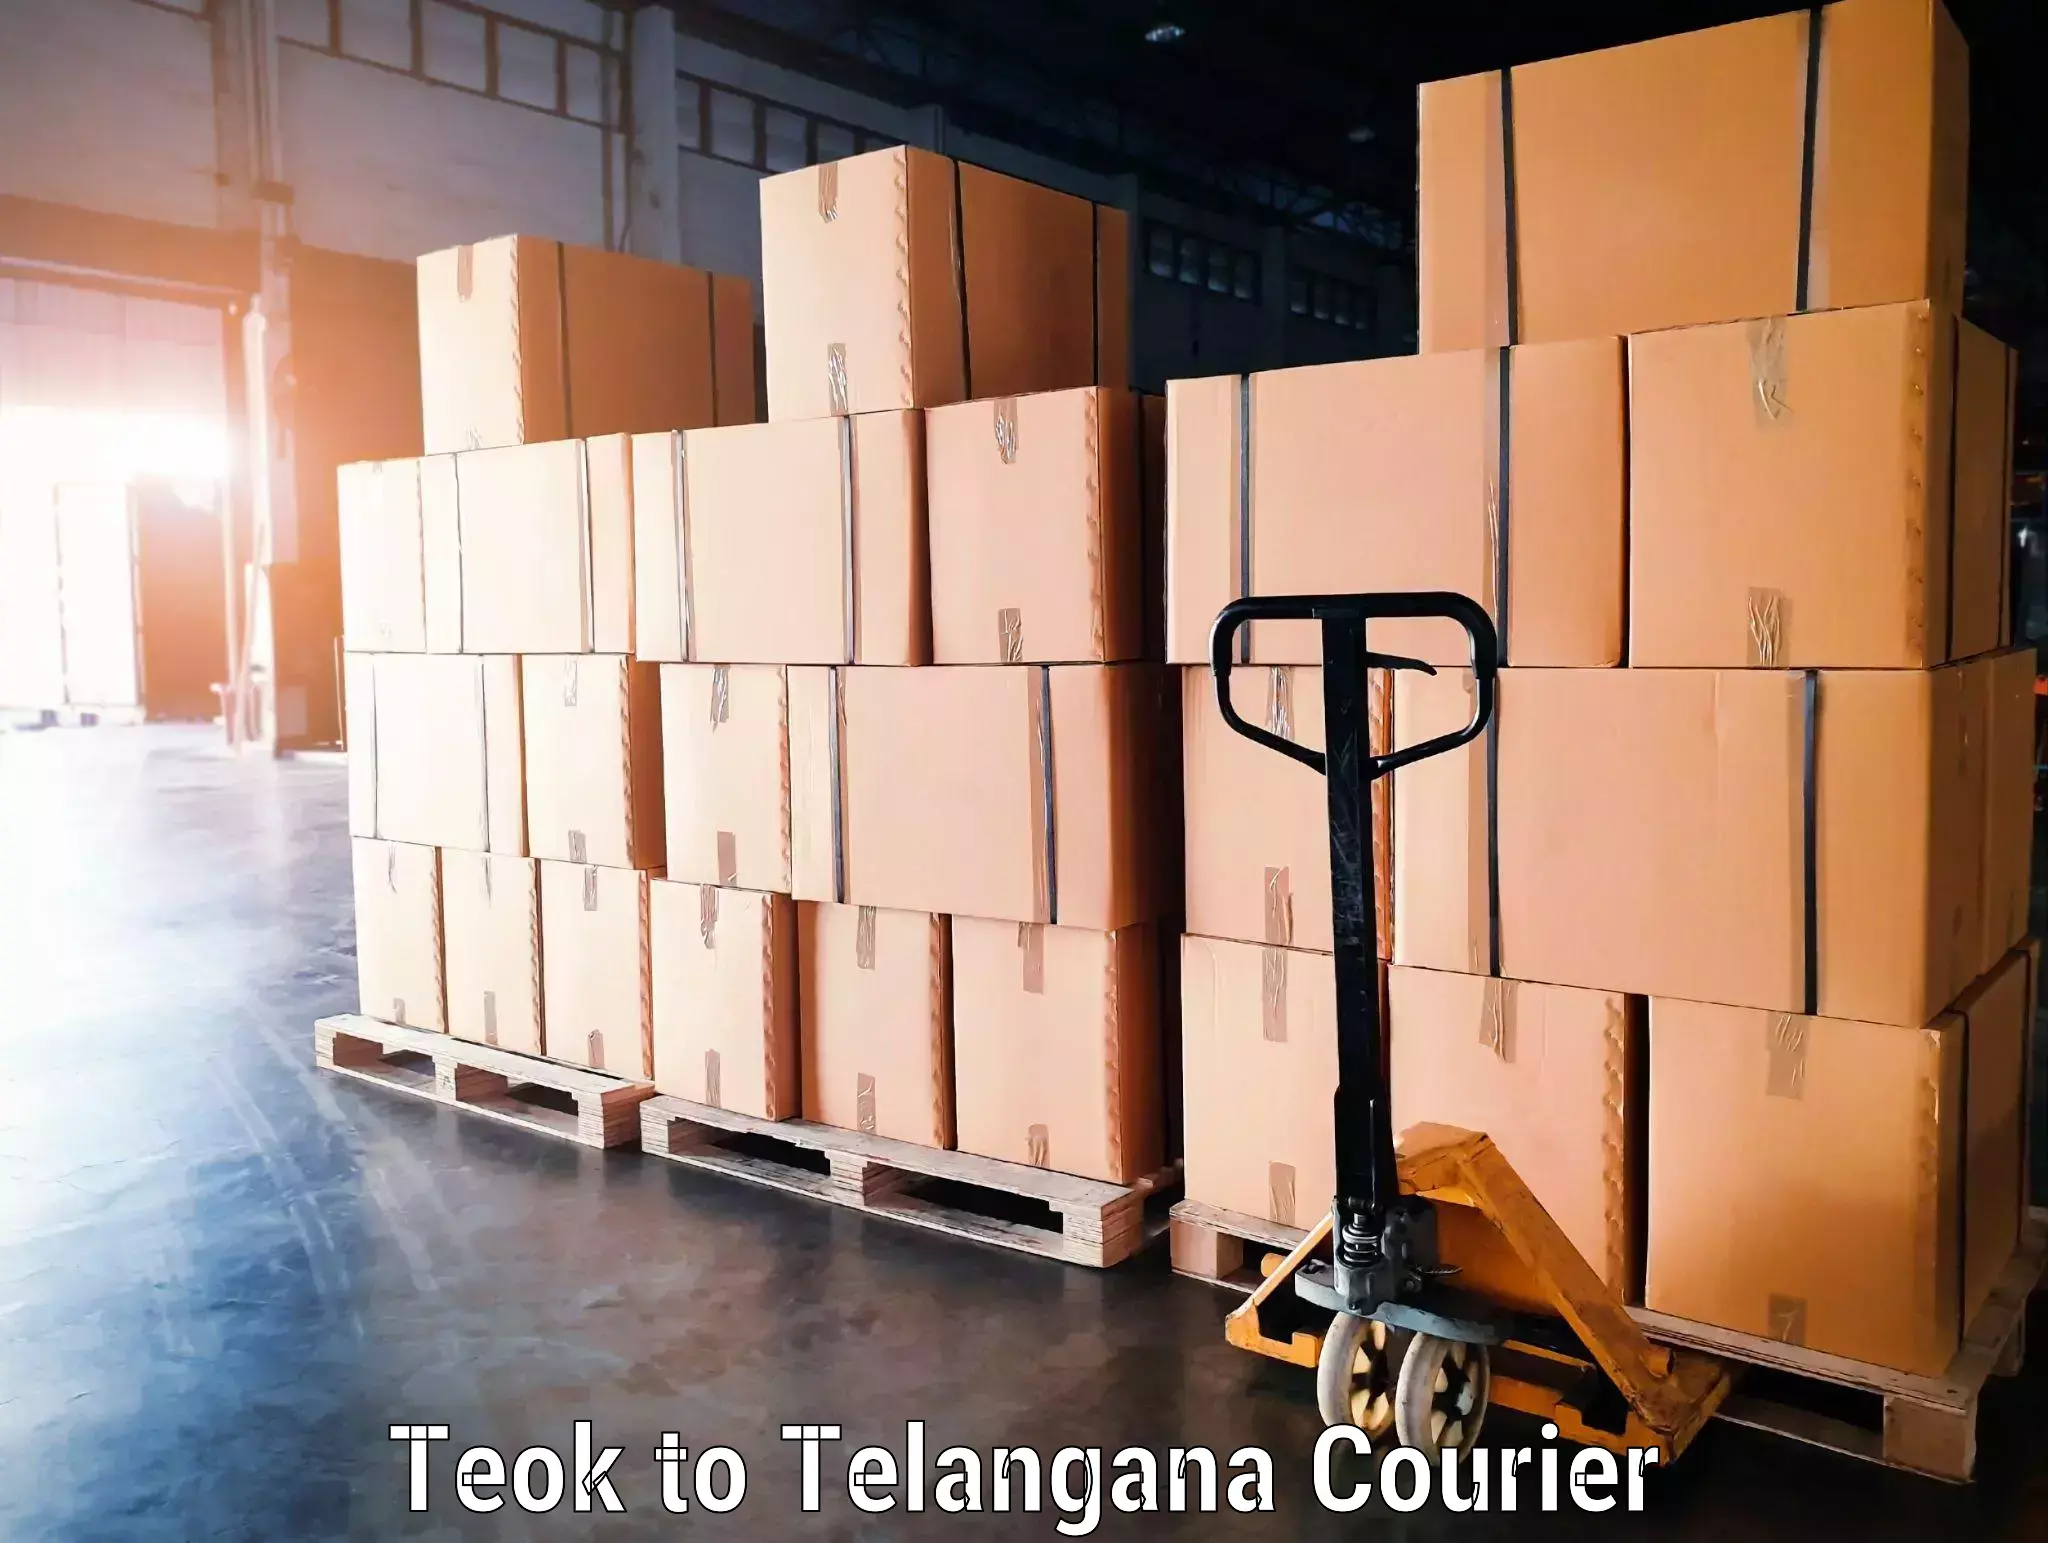 Luggage shipment specialists Teok to Devarakonda